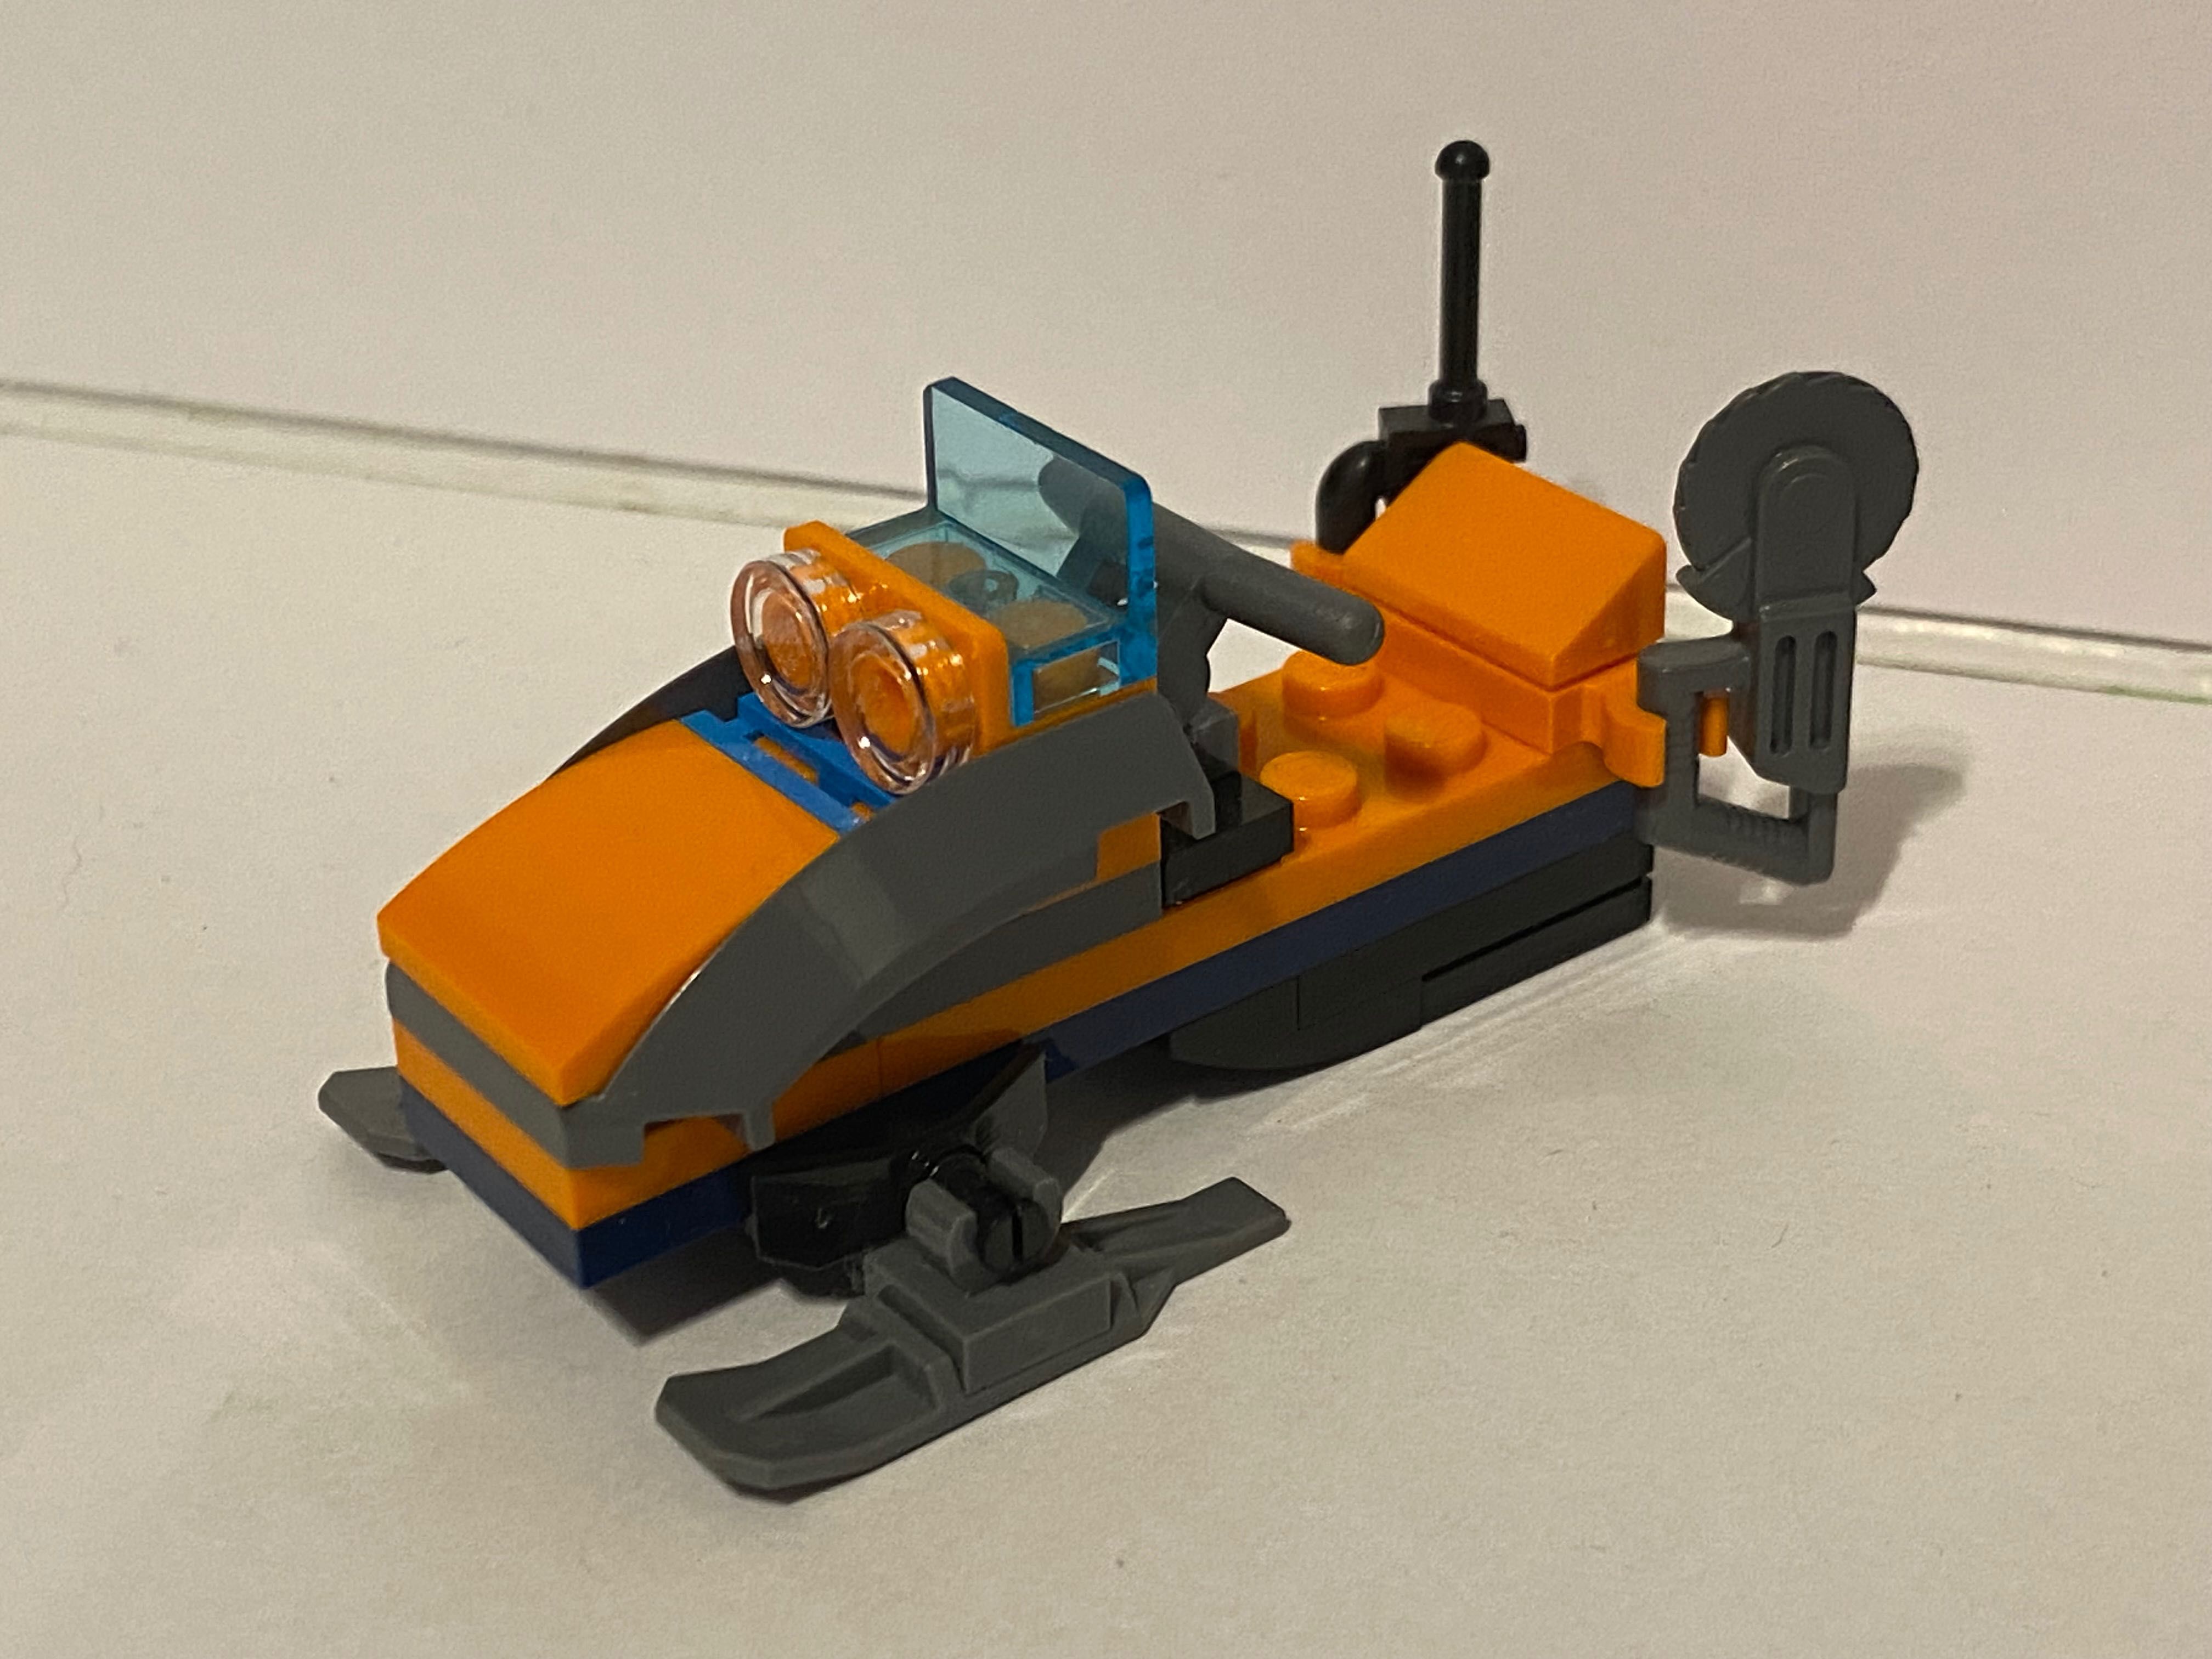 Lego City figurka + pojazd skuter śnieżny stan bdb